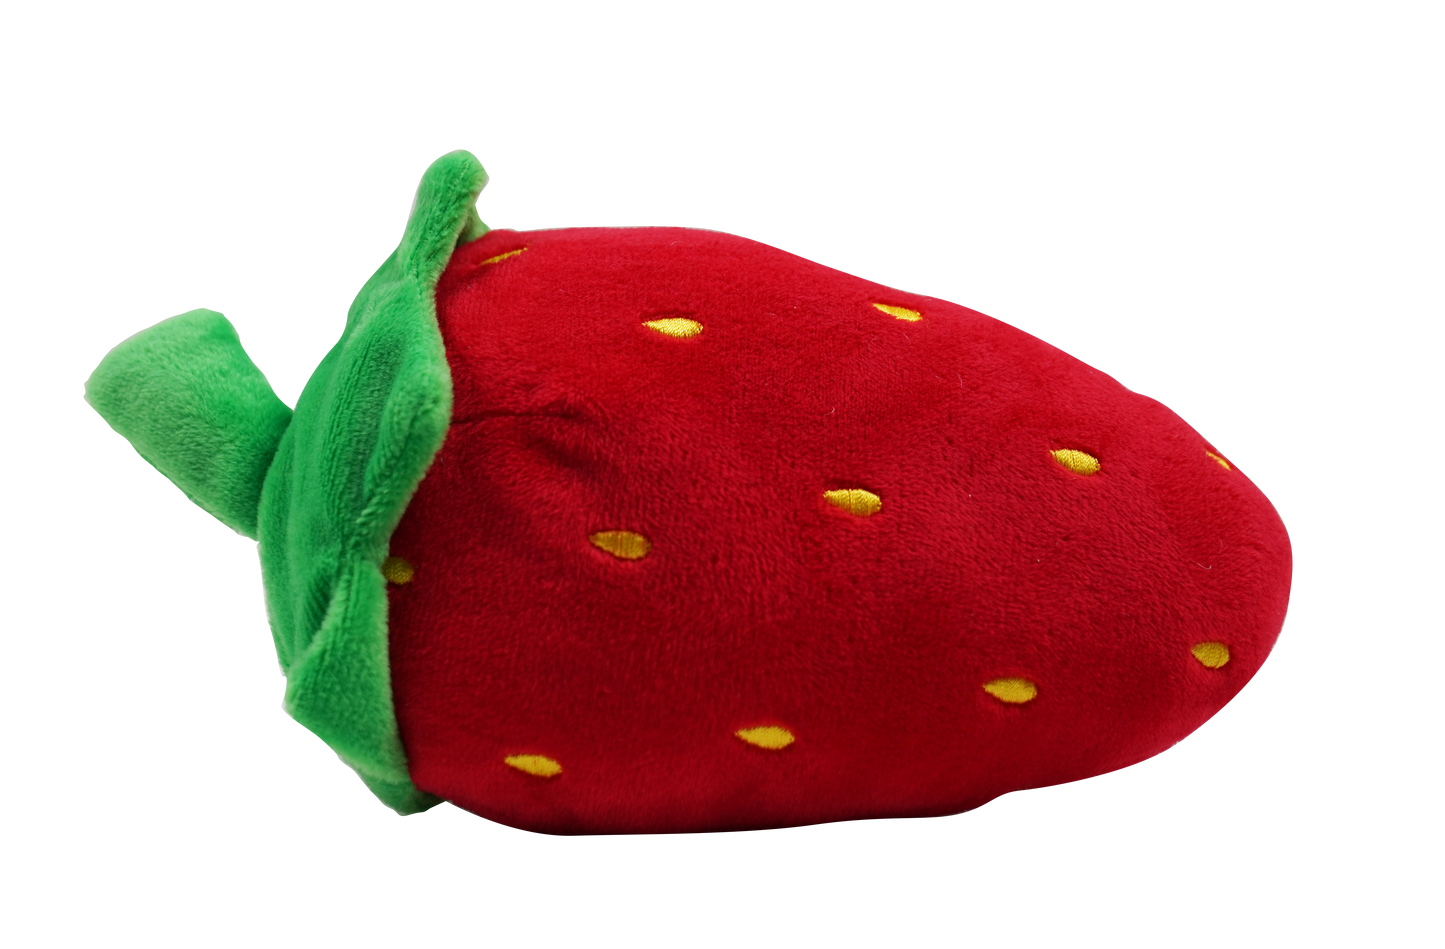 Strawberry Toy